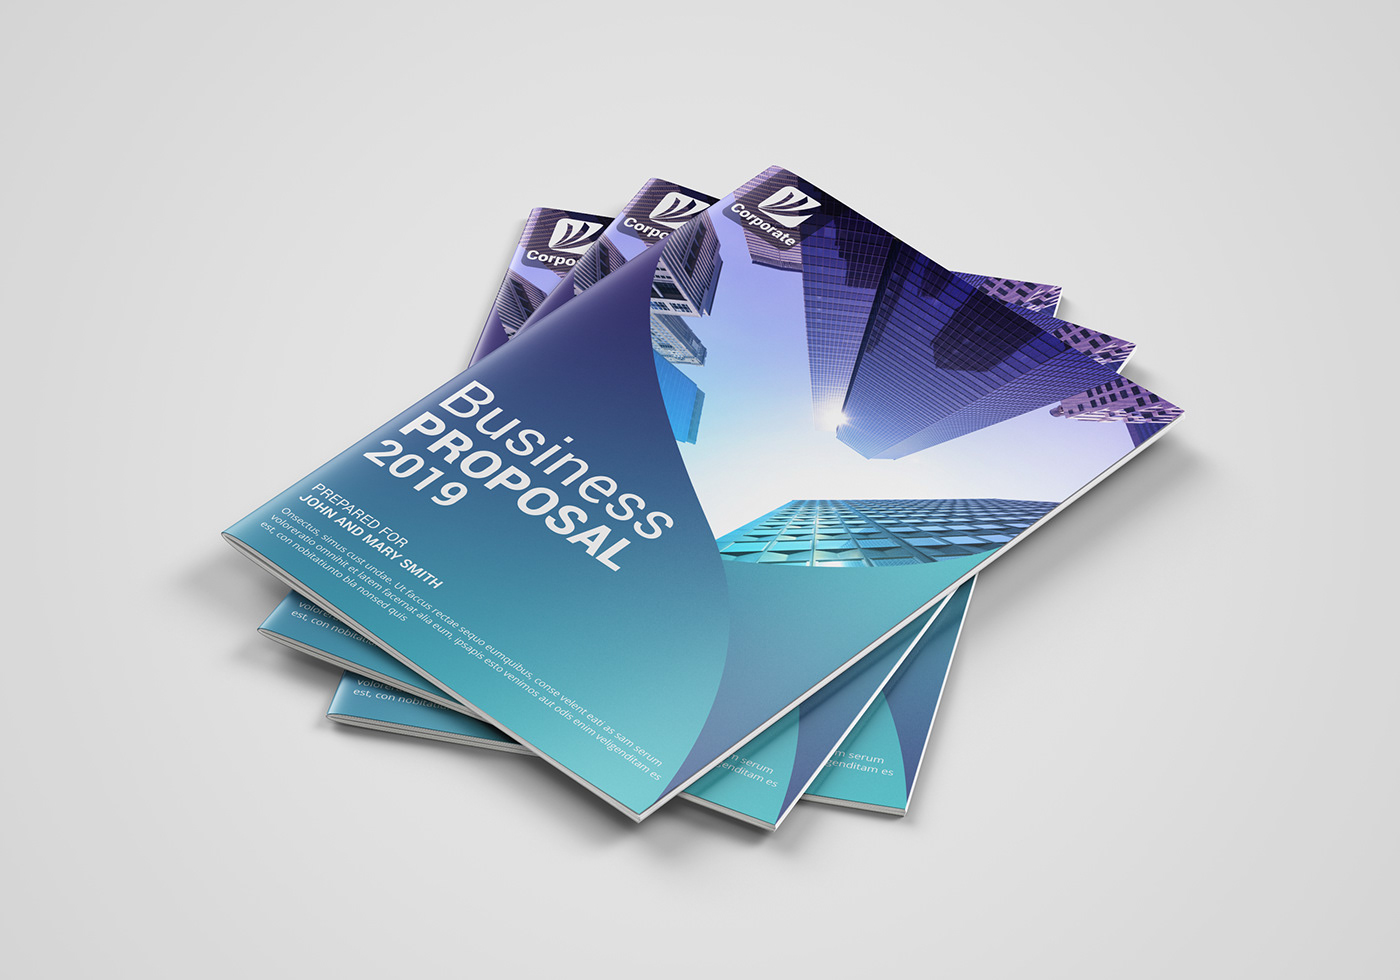 Proposal Business Proposal bifold brochure brochure print template Product Catalog catalog Booklet modern a4